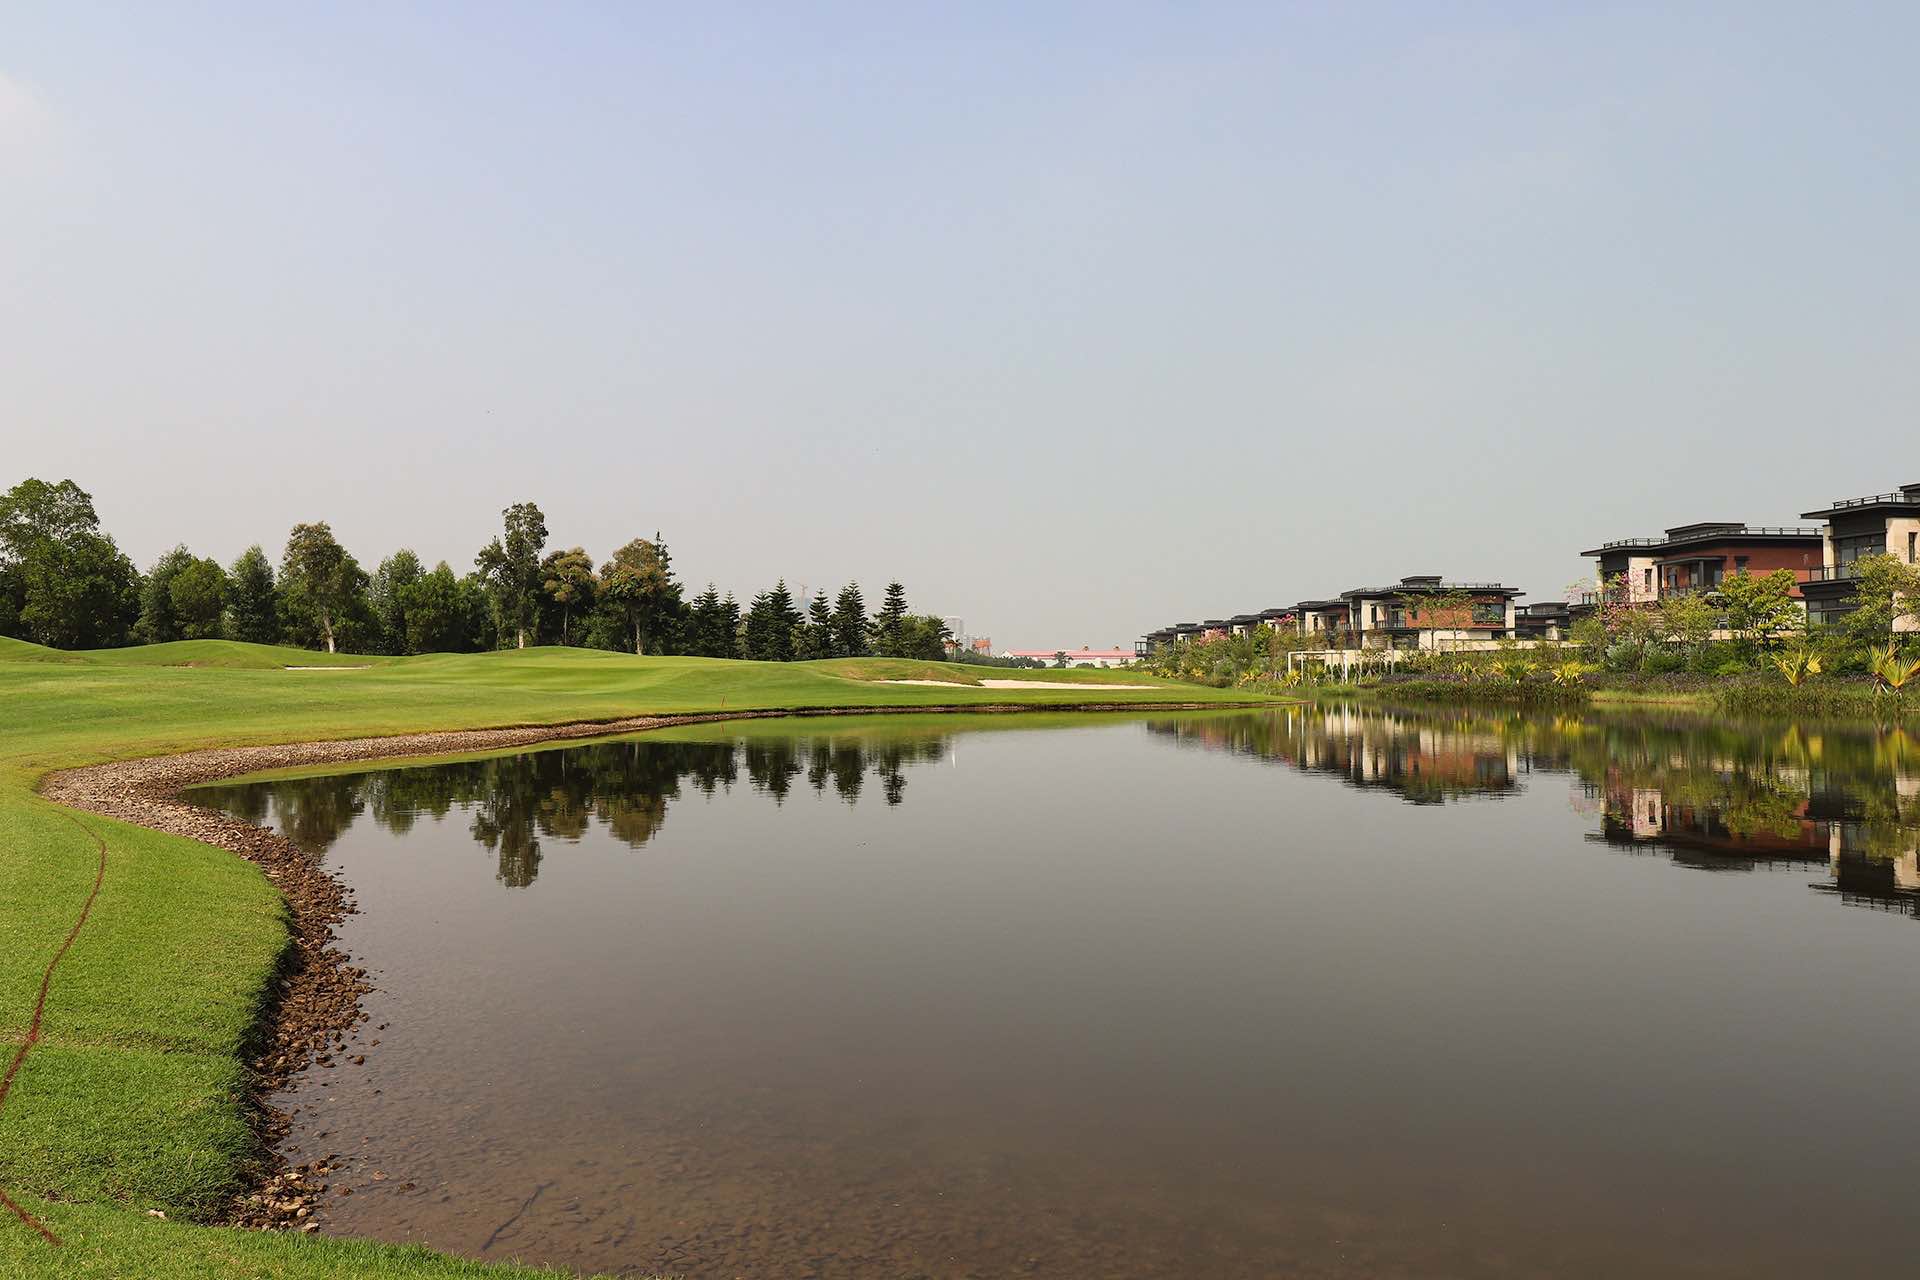 Zhuhai Golden Gulf Golf Club photo across water photo featuring par-3 green